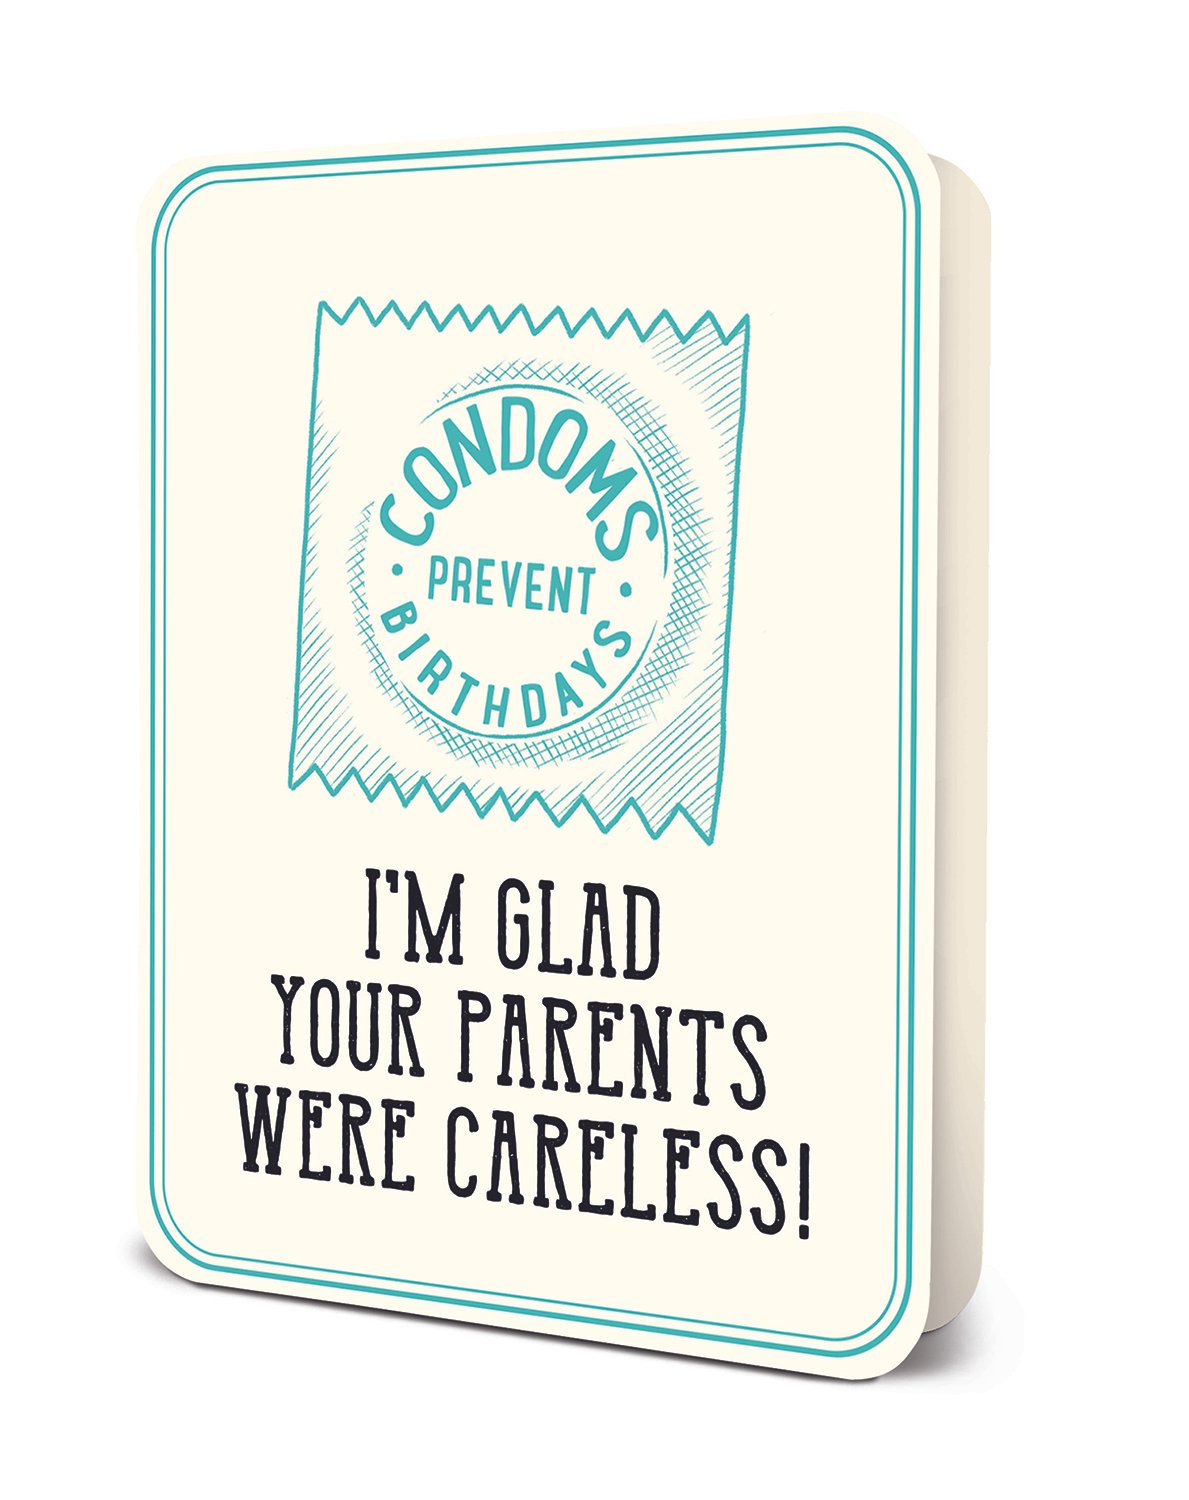 Condoms Prevent Birthdays - Greeting Card Greeting Card Orange Circle Studio